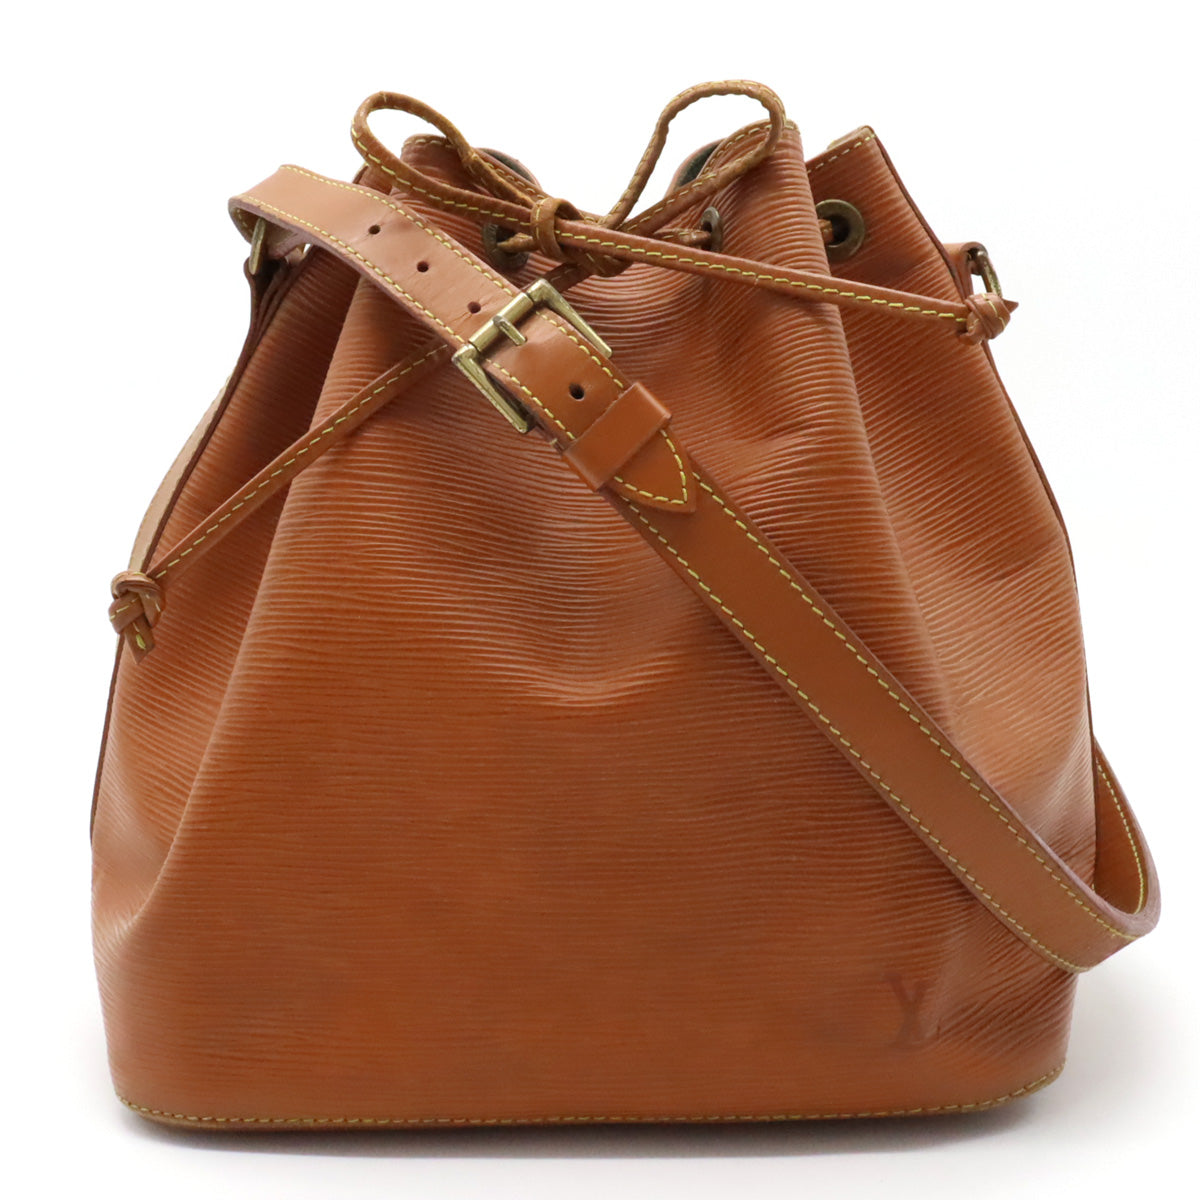 Louis Vuitton Epi Noe Shoulder Bag Brown M44108